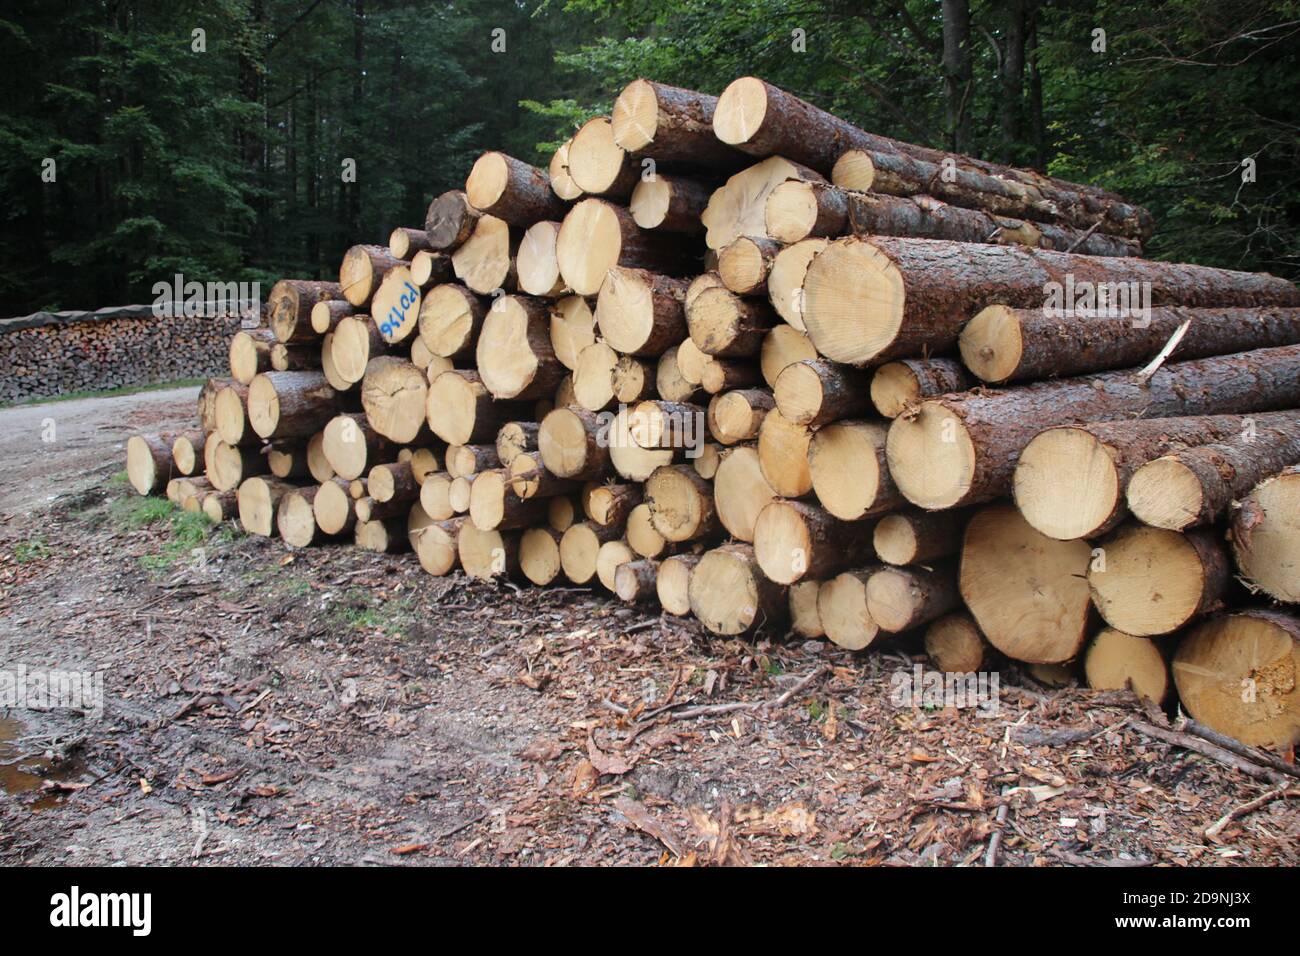 Germany, Bavaria, Upper Bavaria, Karwendel, mountains, Mittenwald, forest, wood storage, wood pile, tree trunks, Stock Photo